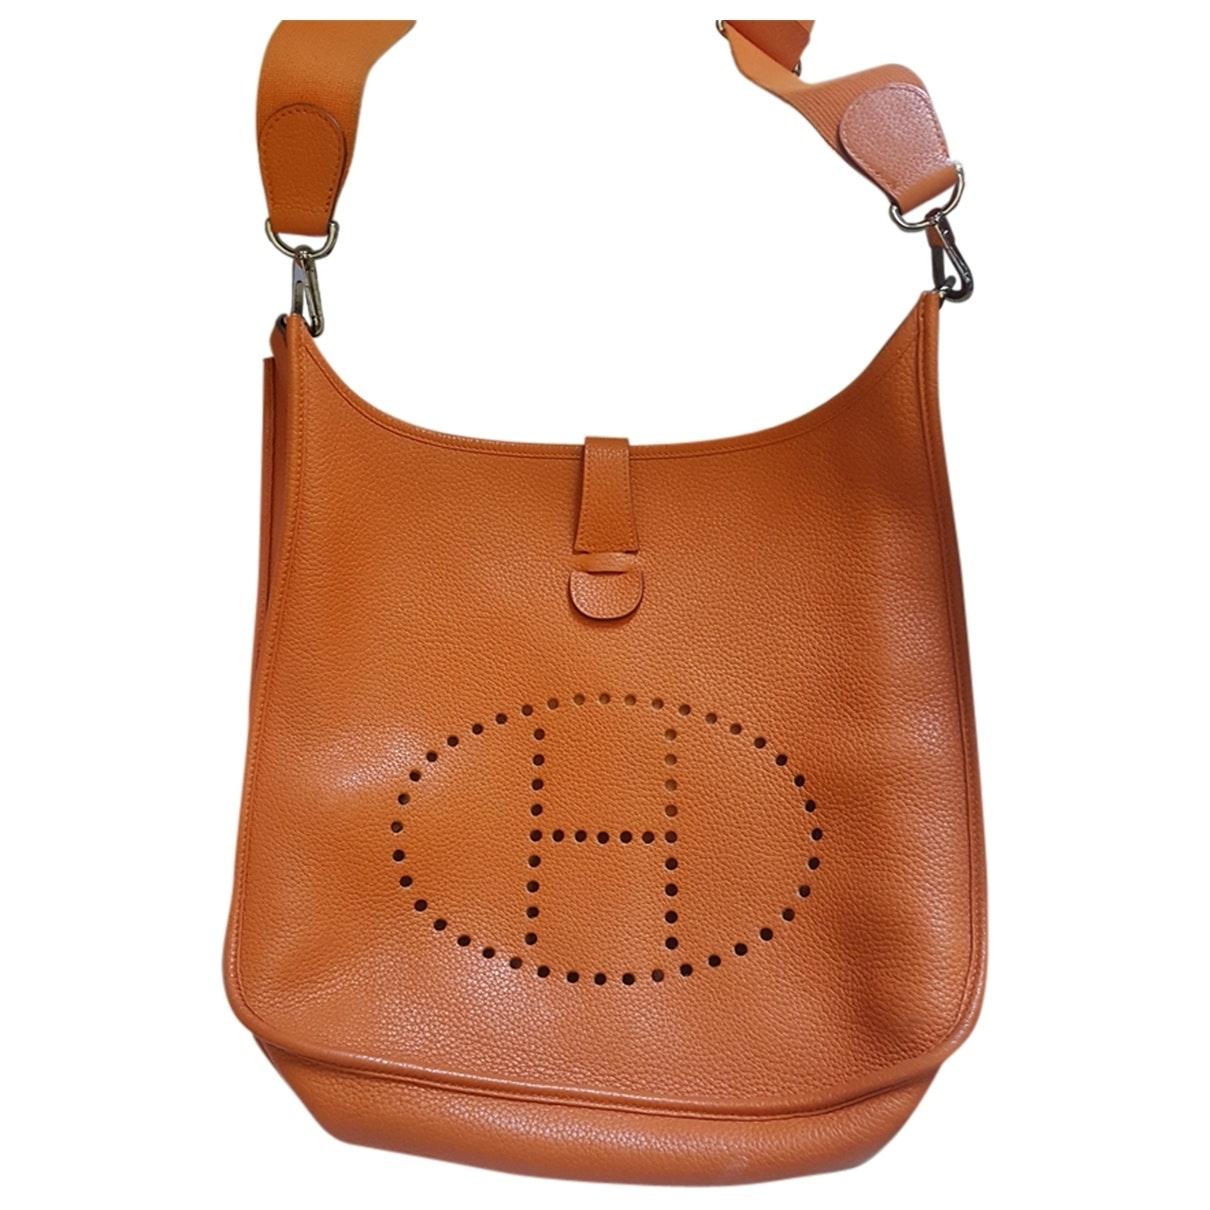 Hermès Evelyne Leather Crossbody Bag in Orange - Lyst